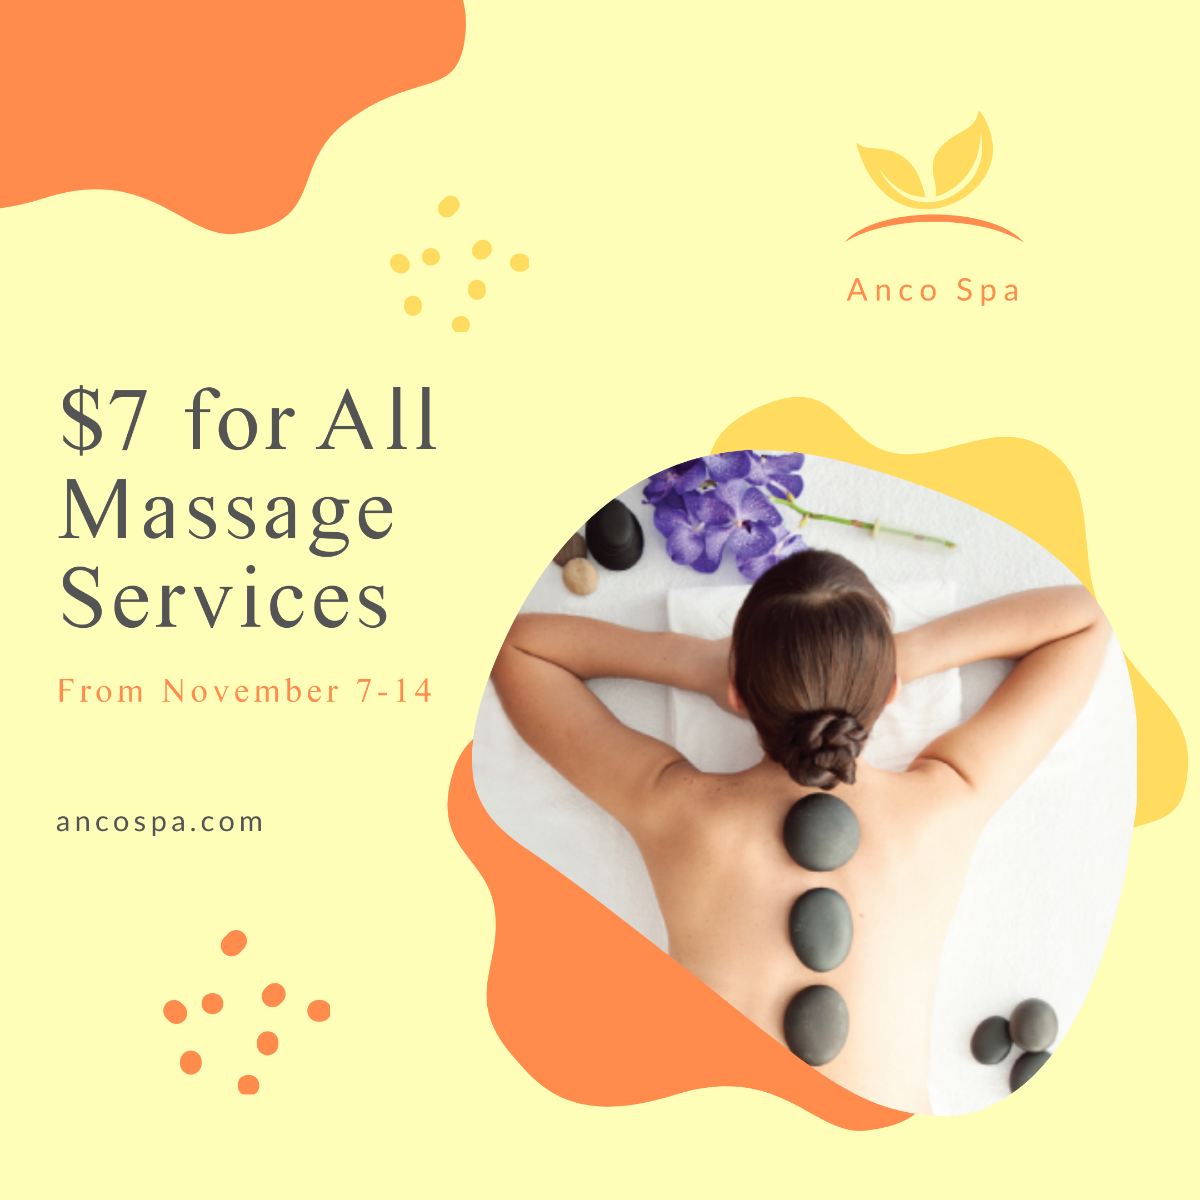 Massage Services Discount Offer Post, Instagram, Facebook Template